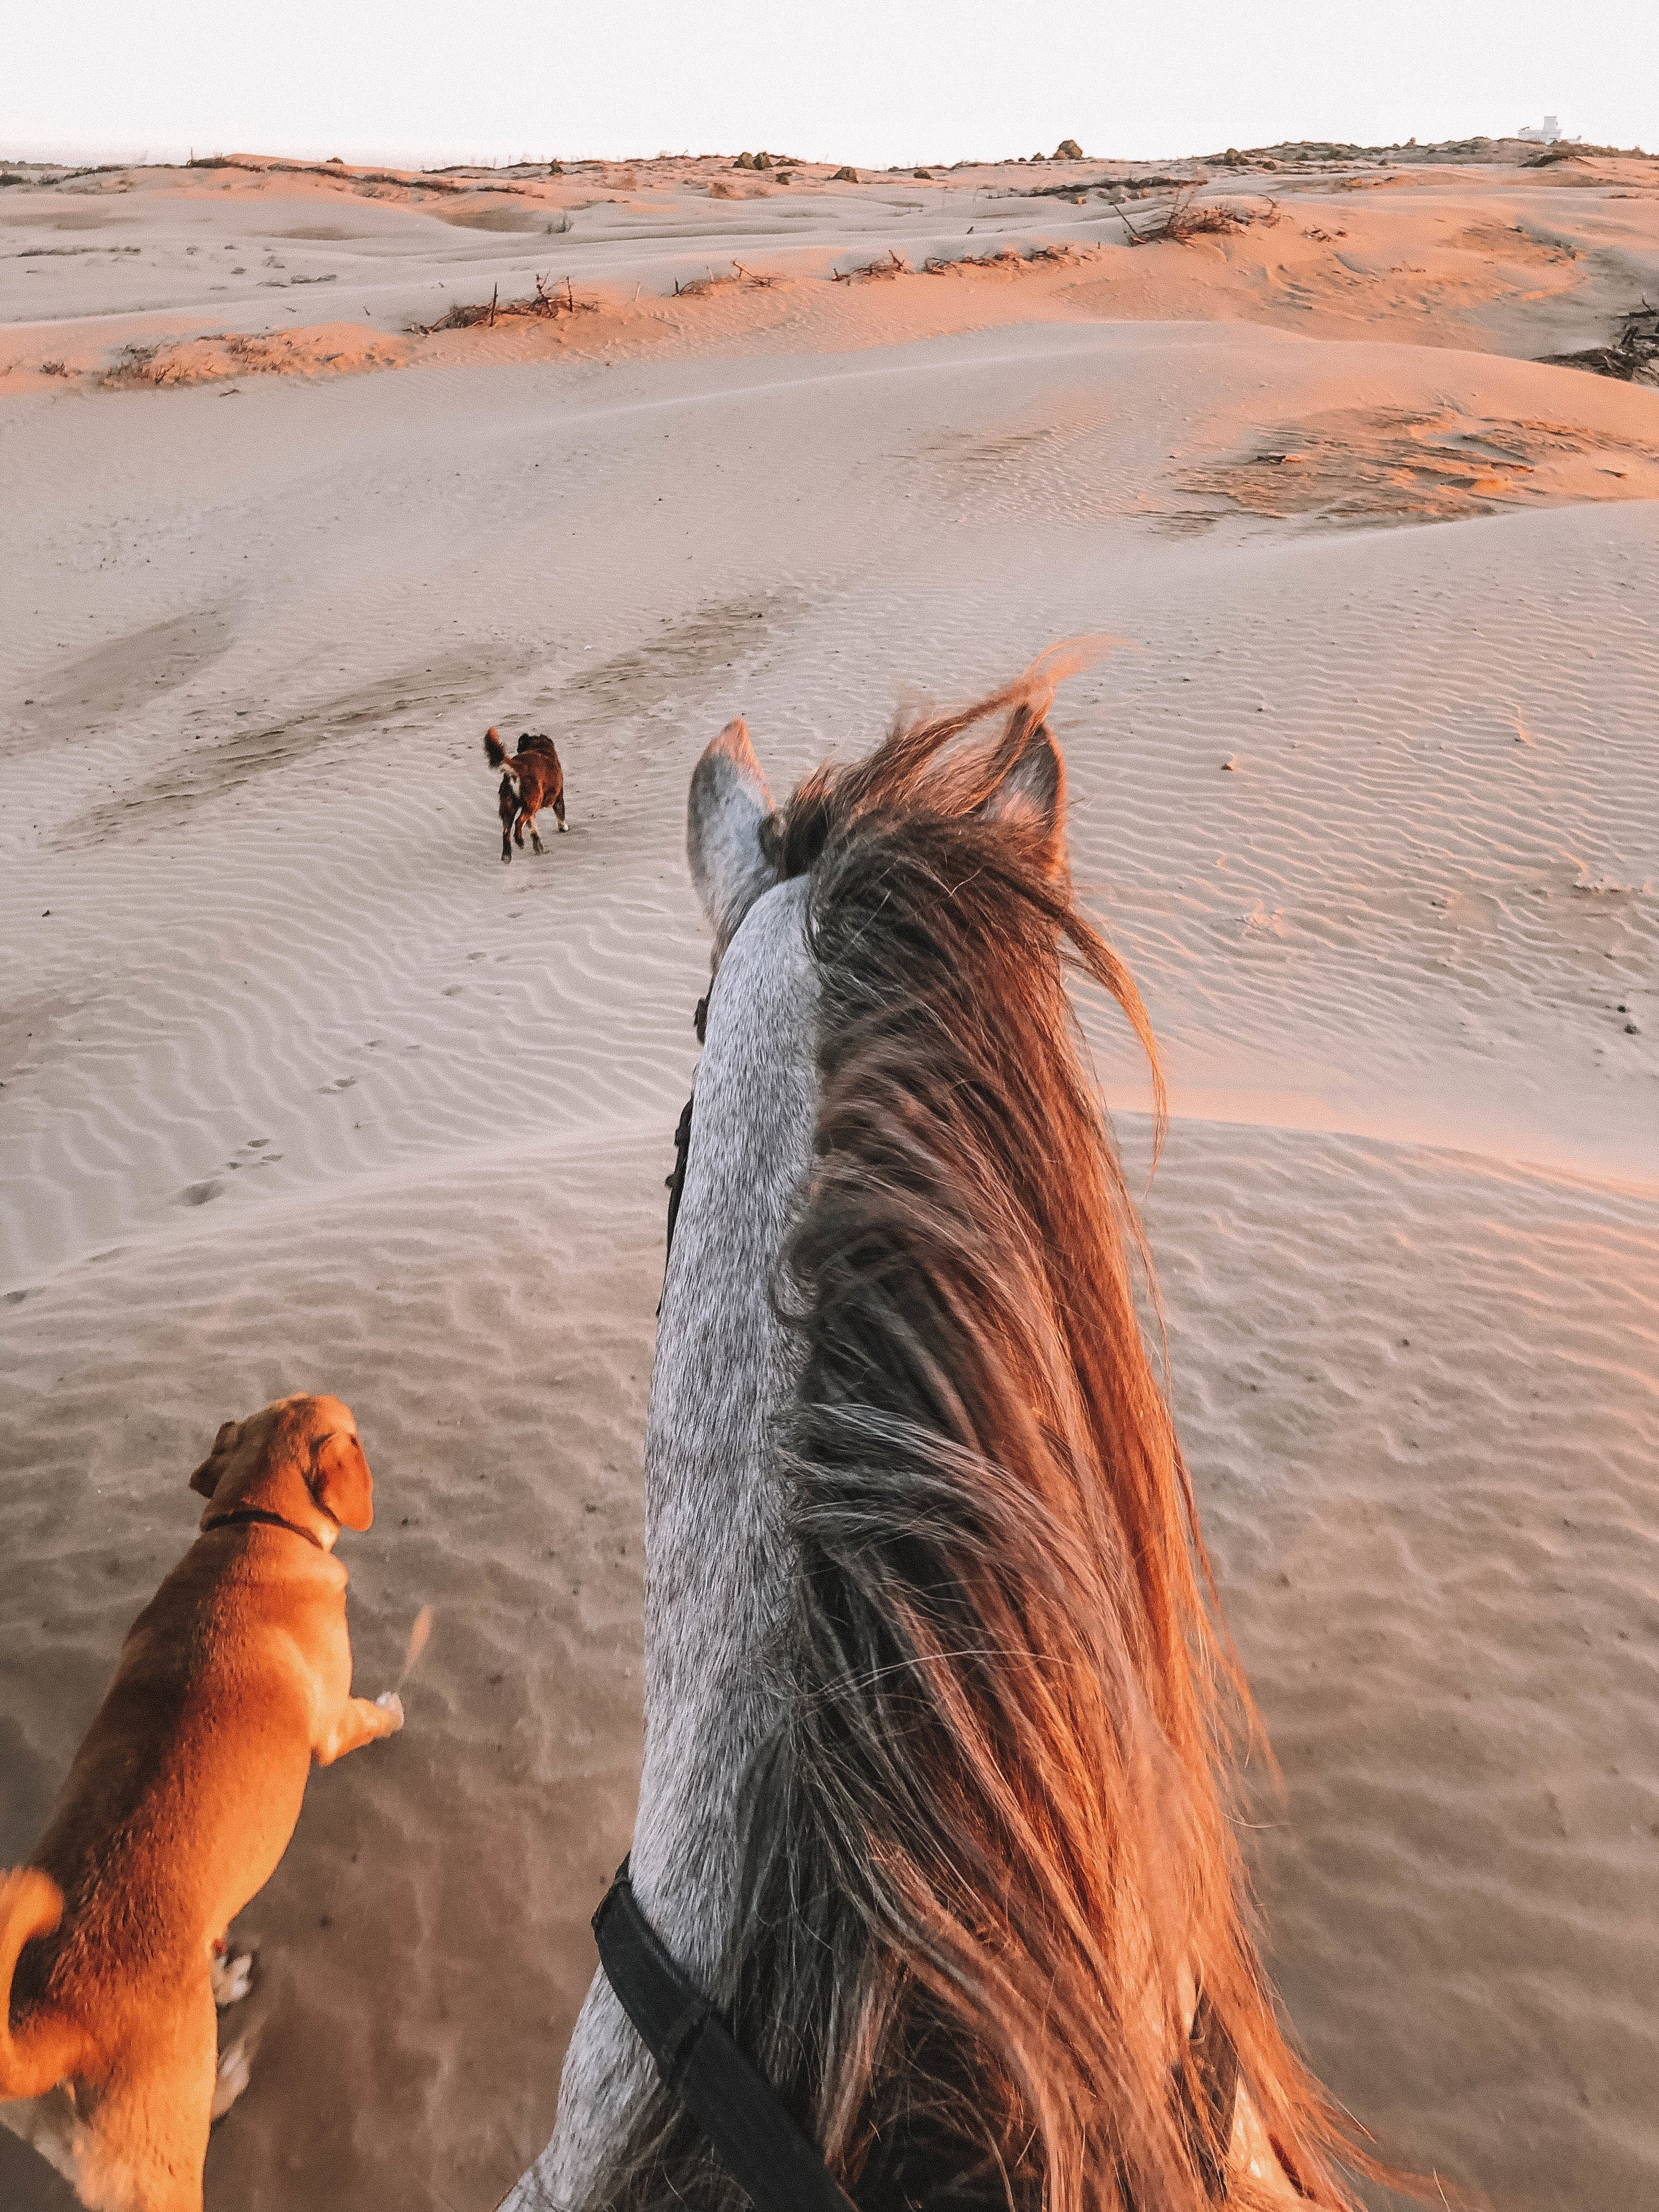 Horseback riding in the sand dunes - Essaouira - Morocco